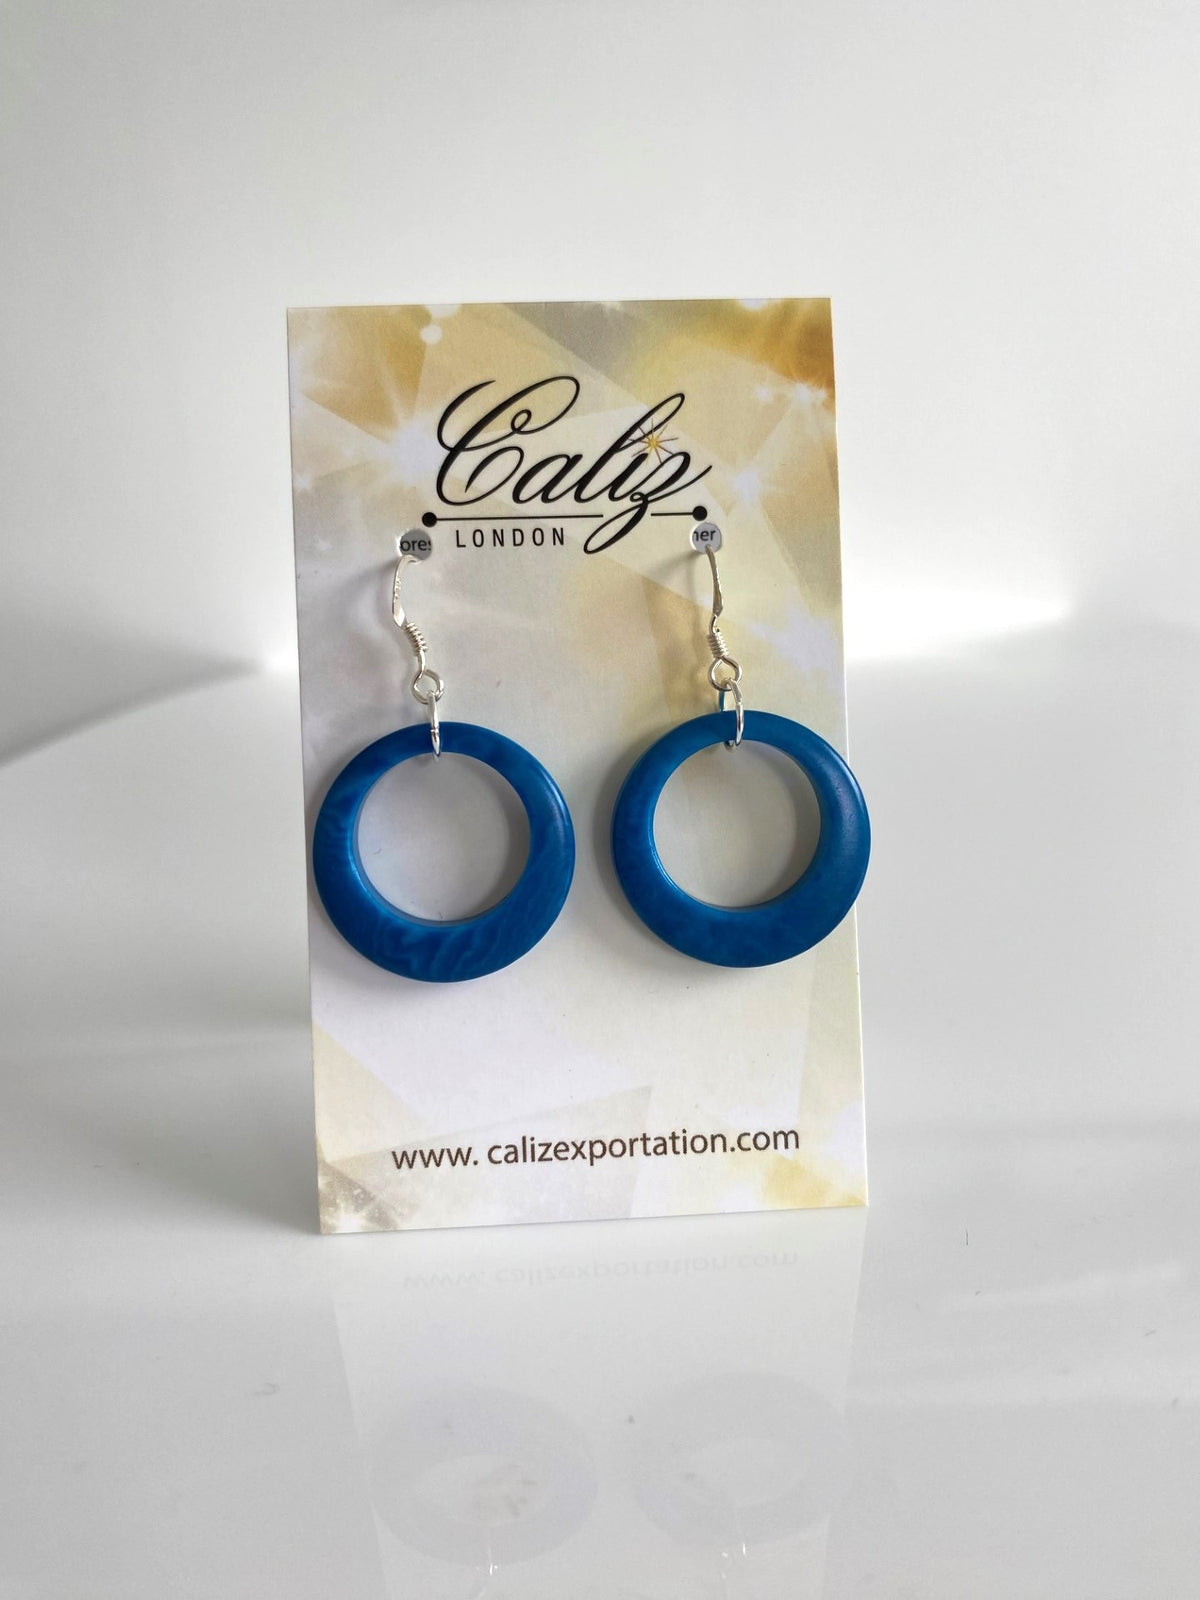 Aros Earrings - Turquoise